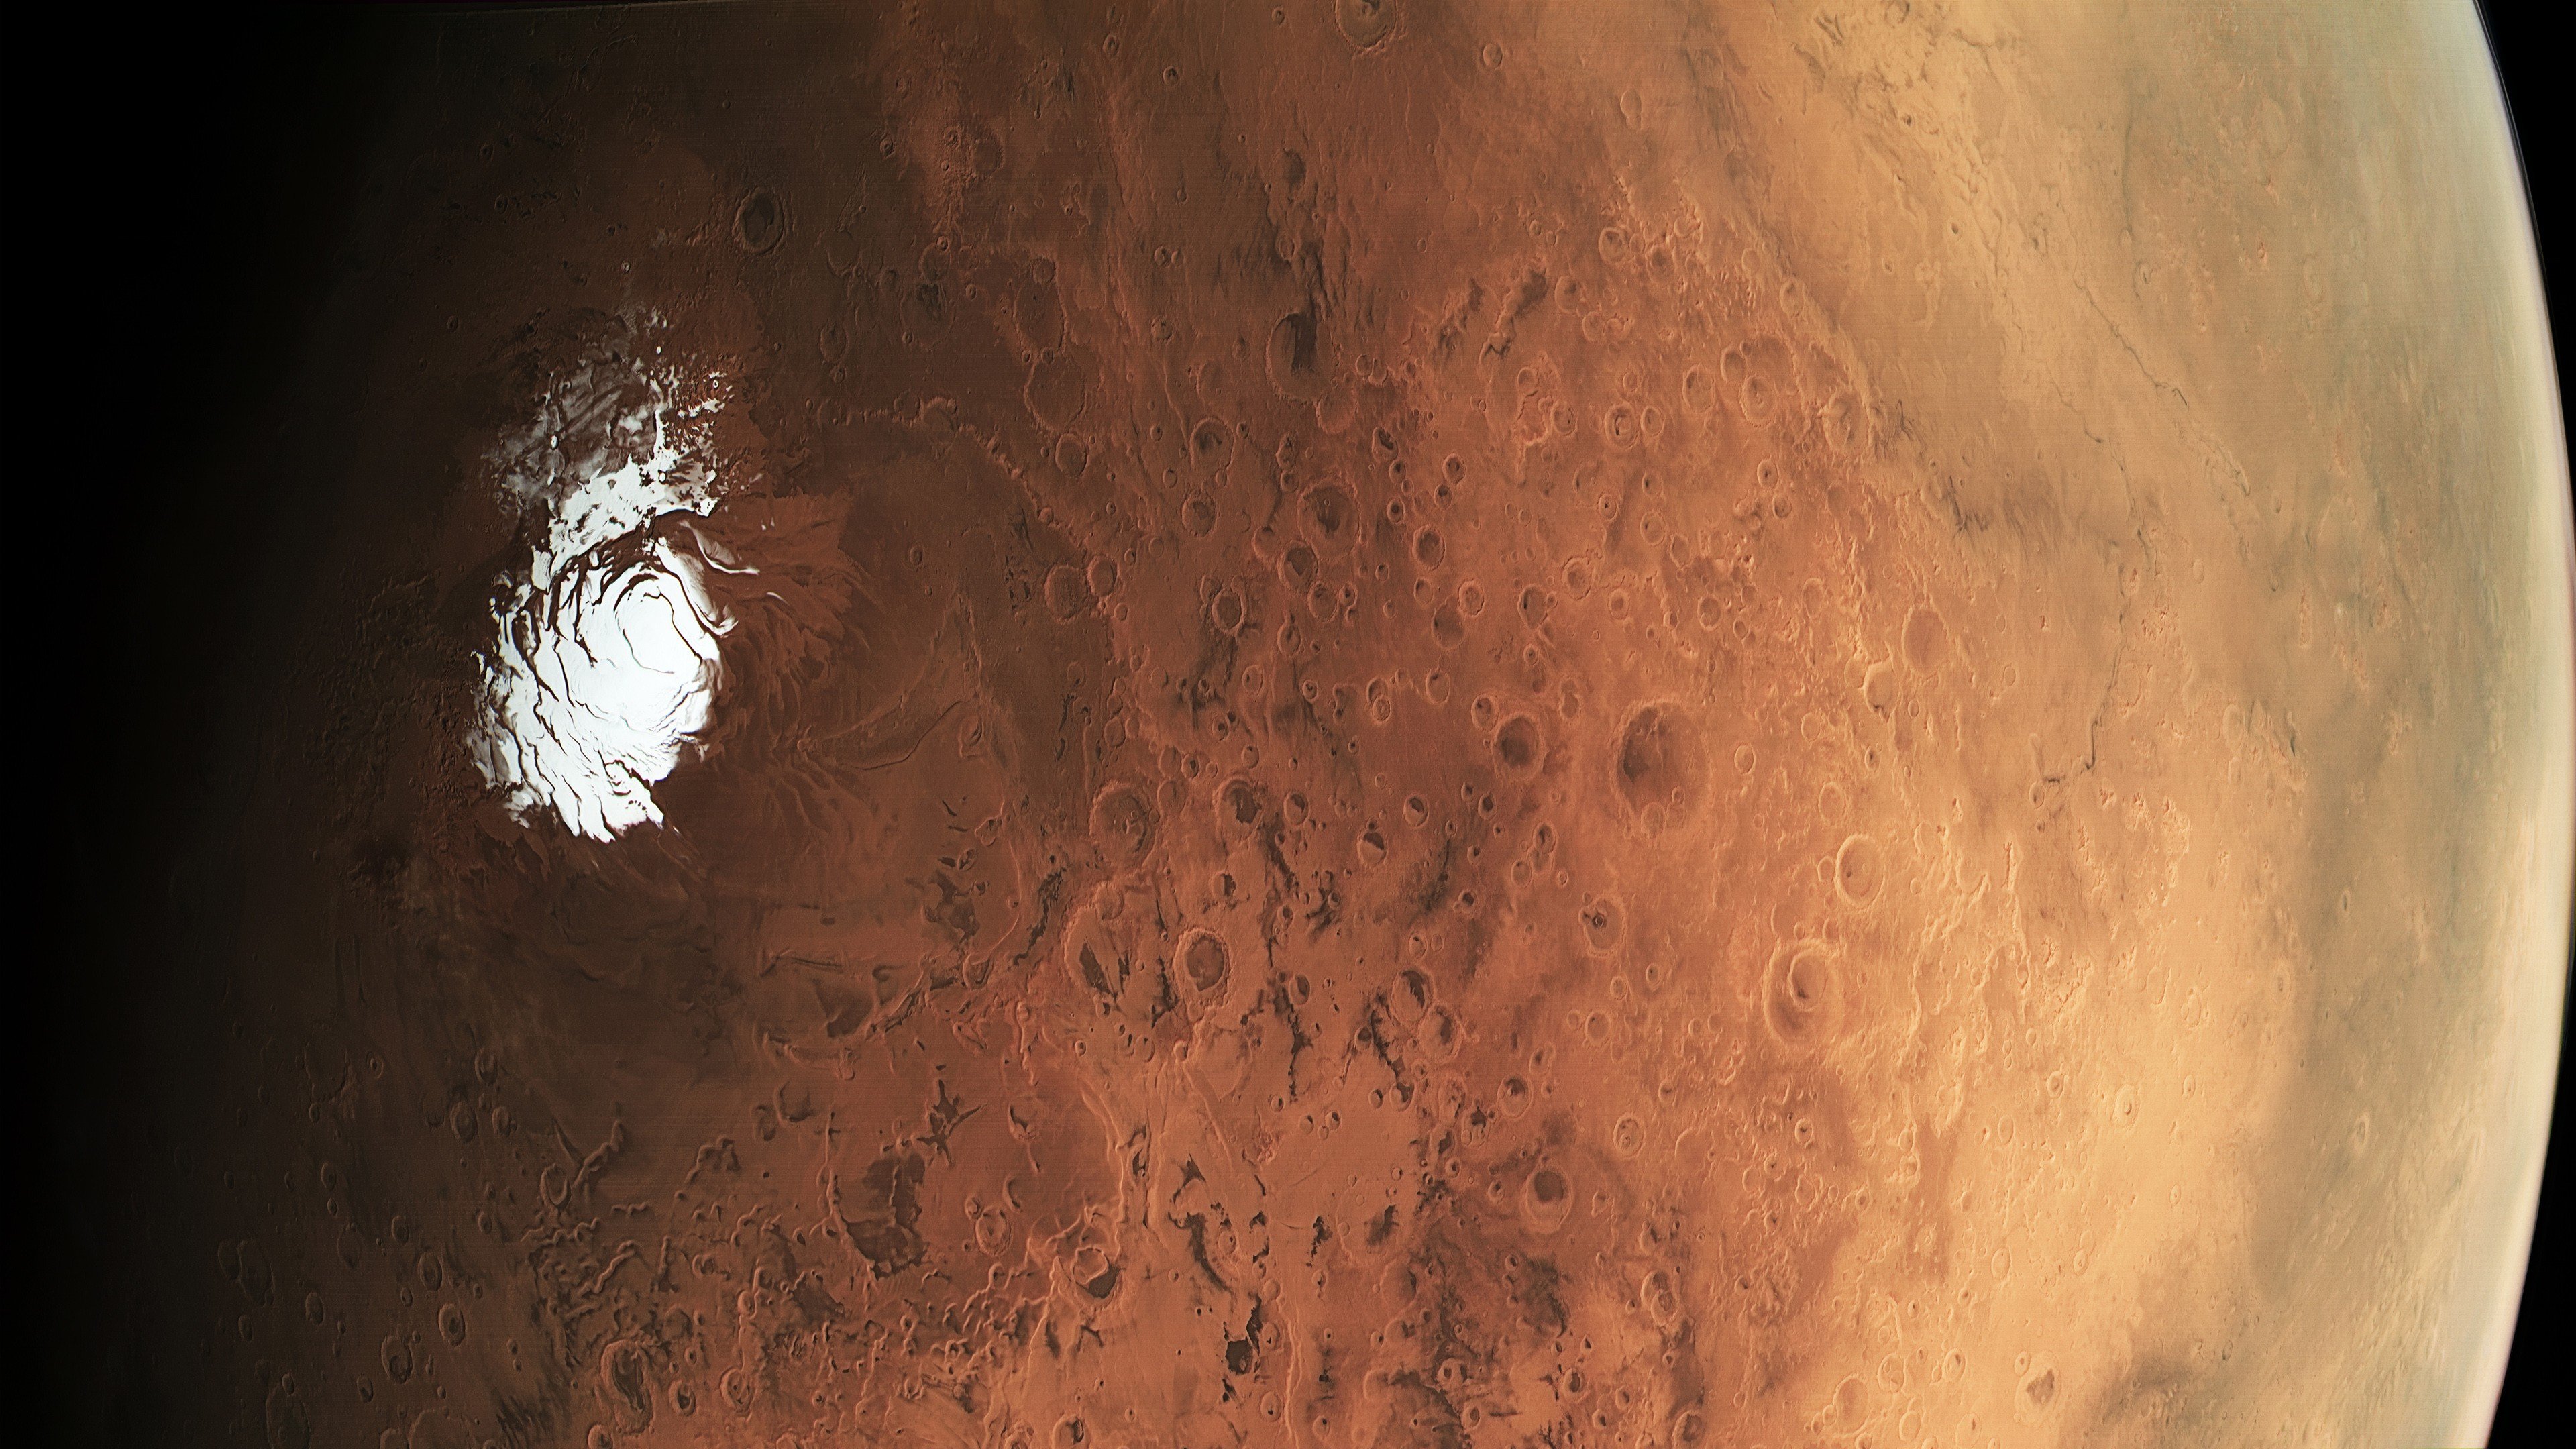 Mars, ESA Wallpaper